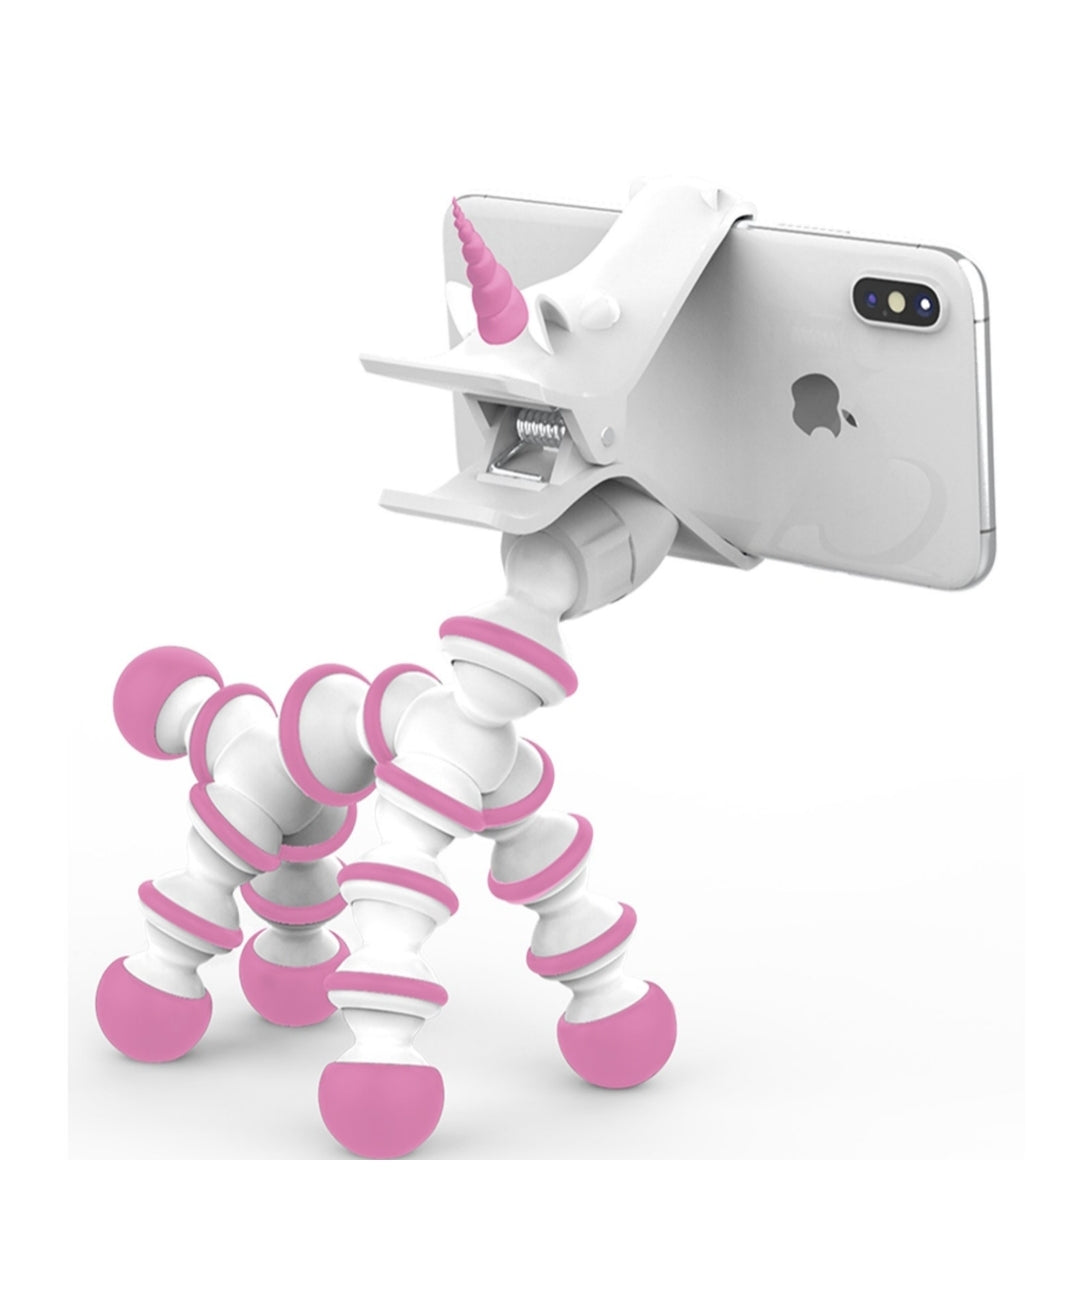 Premier Unicorn Multi-flex Smartphone Grip Mount